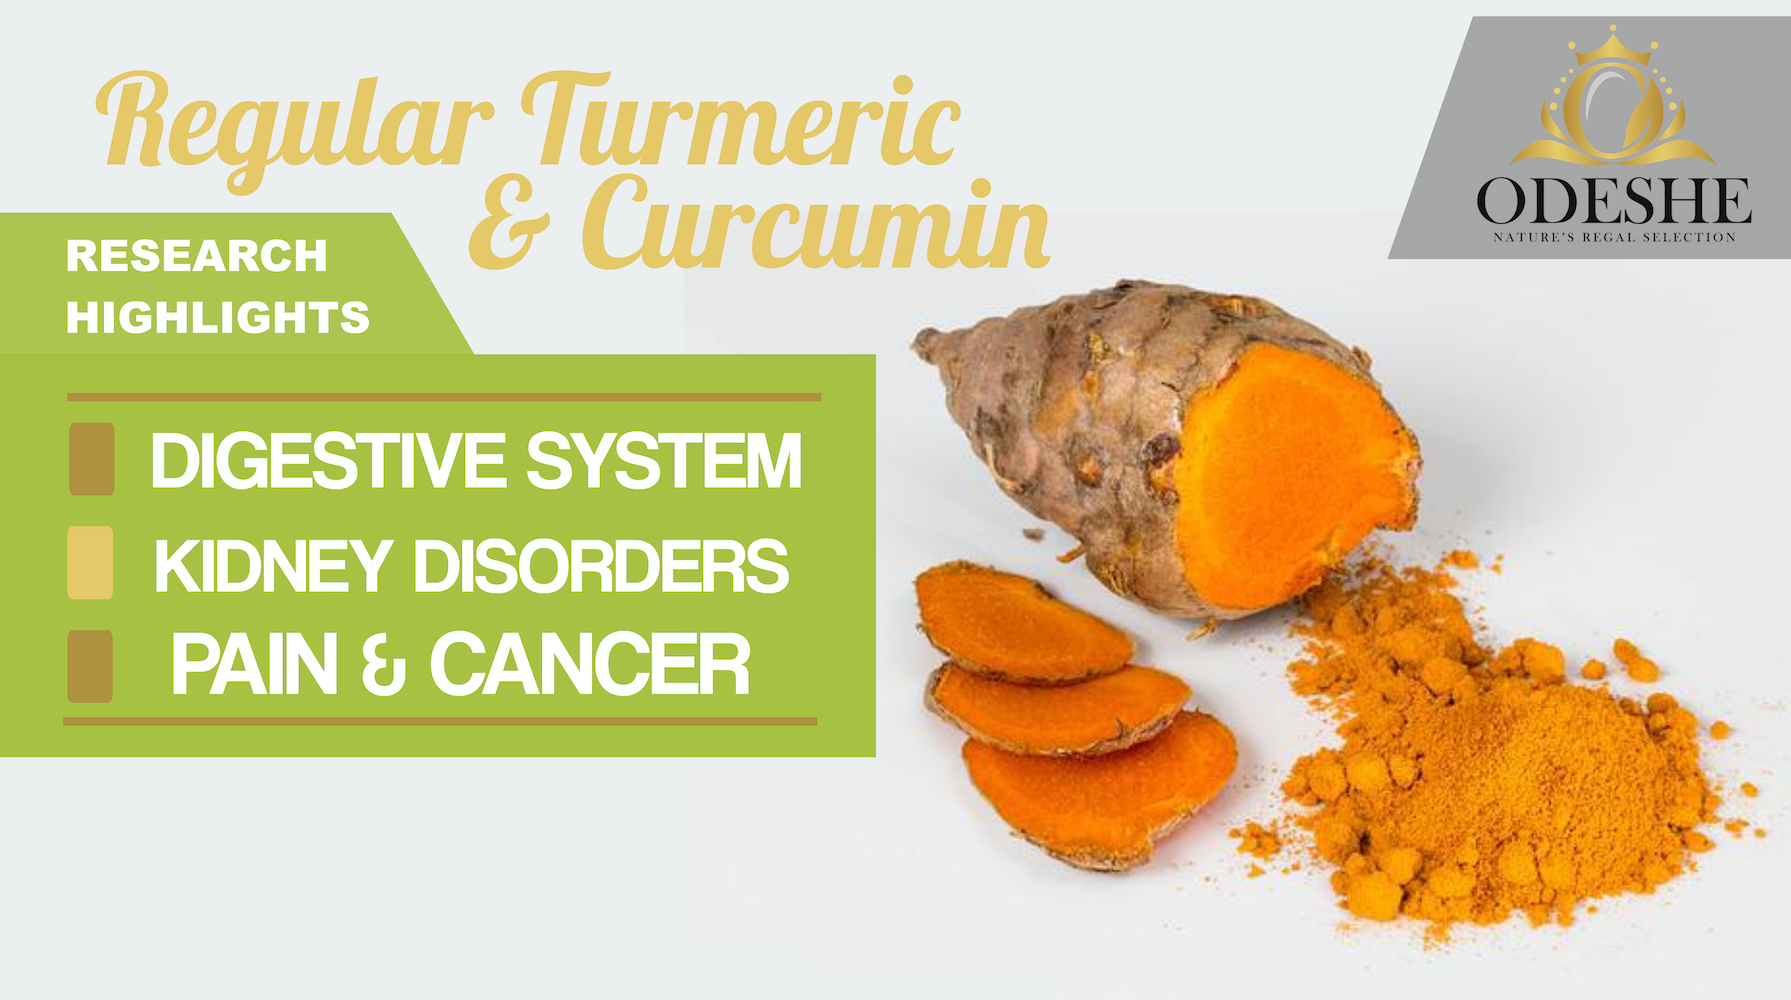 Regular Turmeric & Curcumin Supplement Benefits in Over 15 (Small) Human Studies  